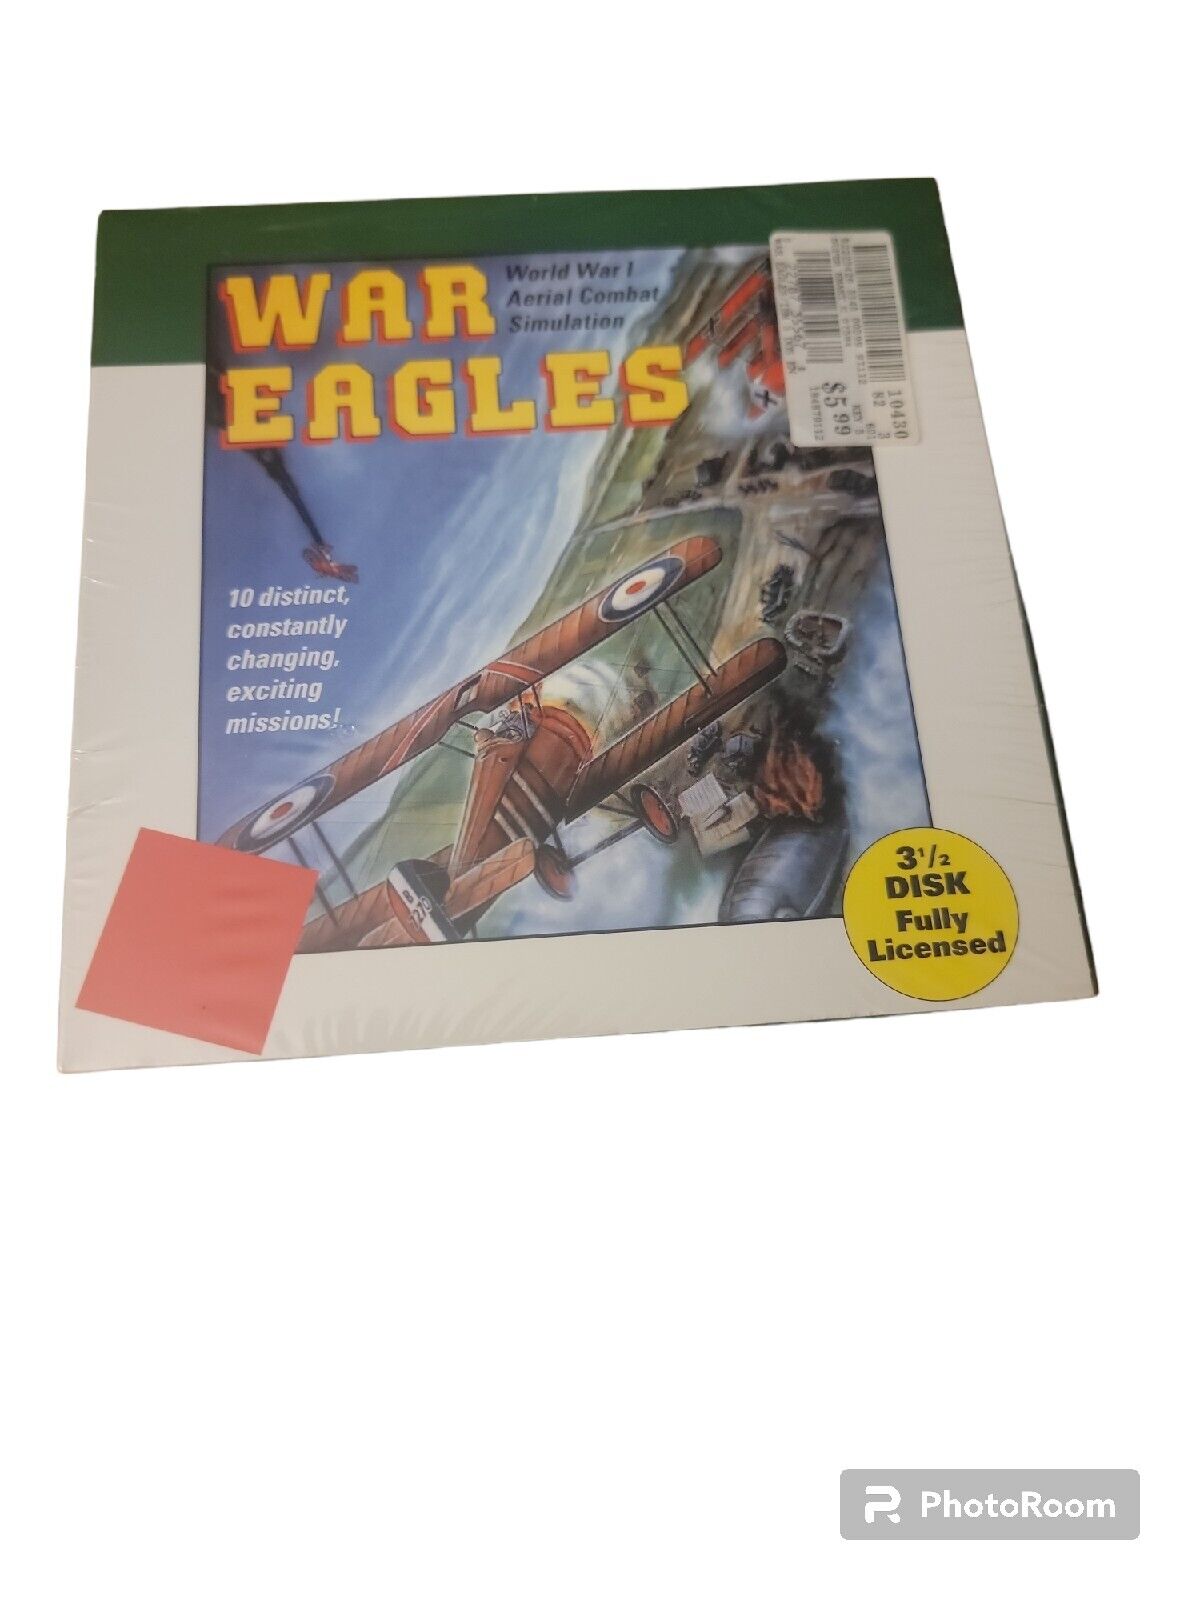 War Eagles World War I Aerial Combat Simulation Game IBM PC Tandy 3.5 NEW SEALED